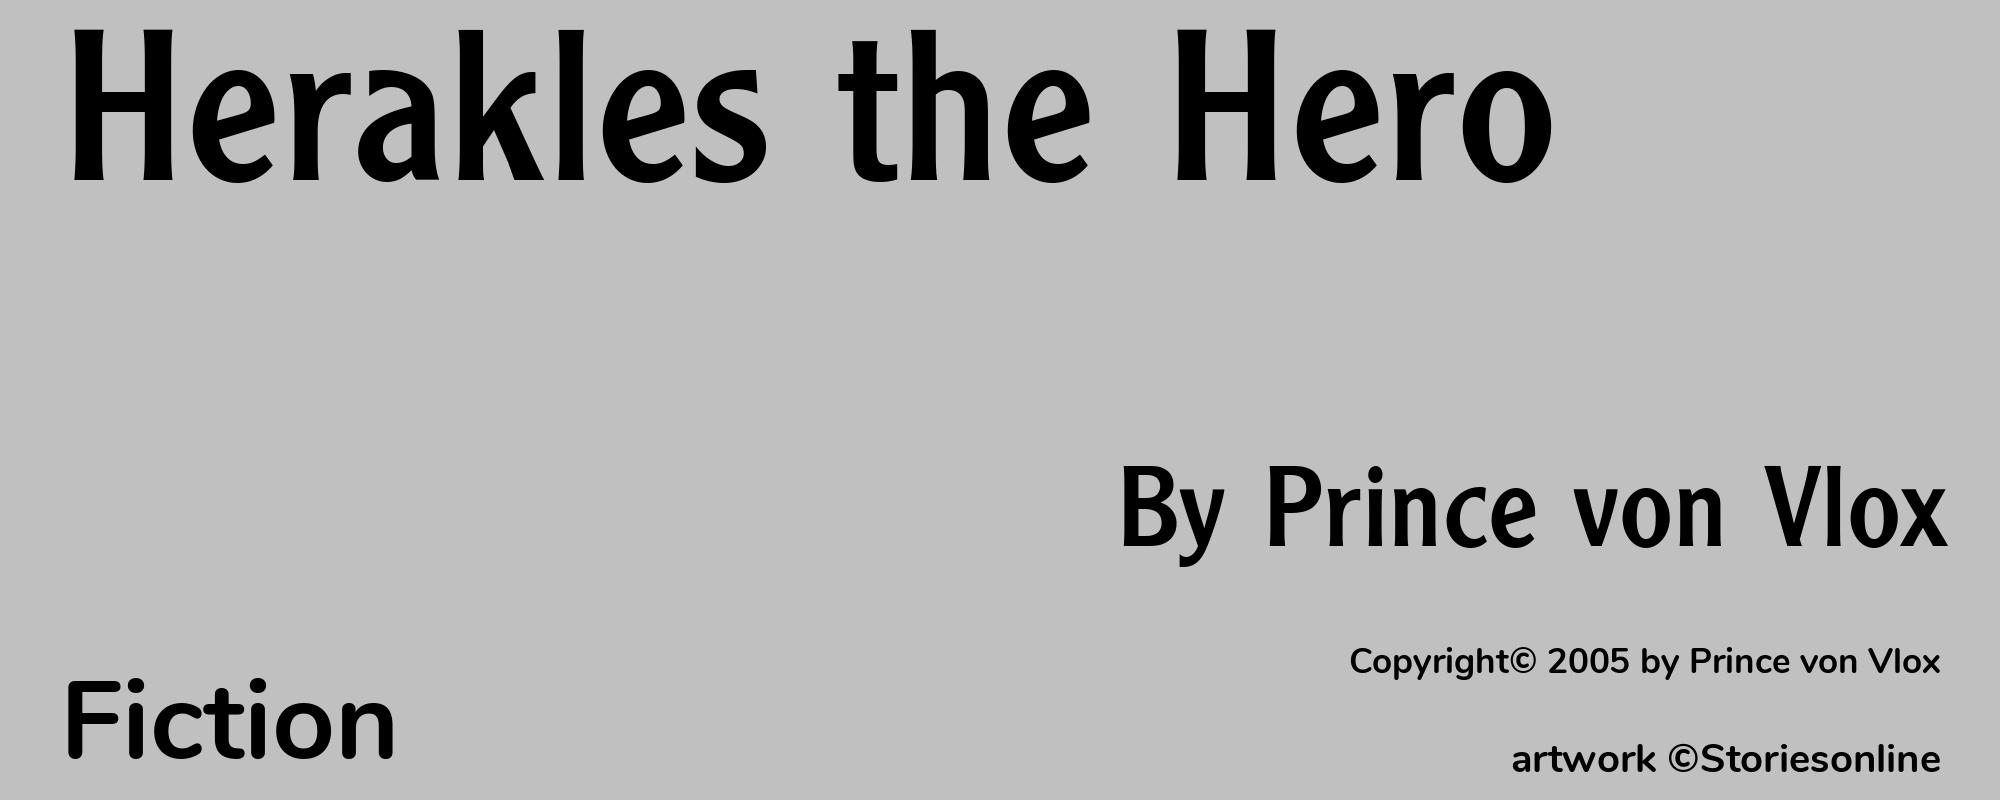 Herakles the Hero - Cover